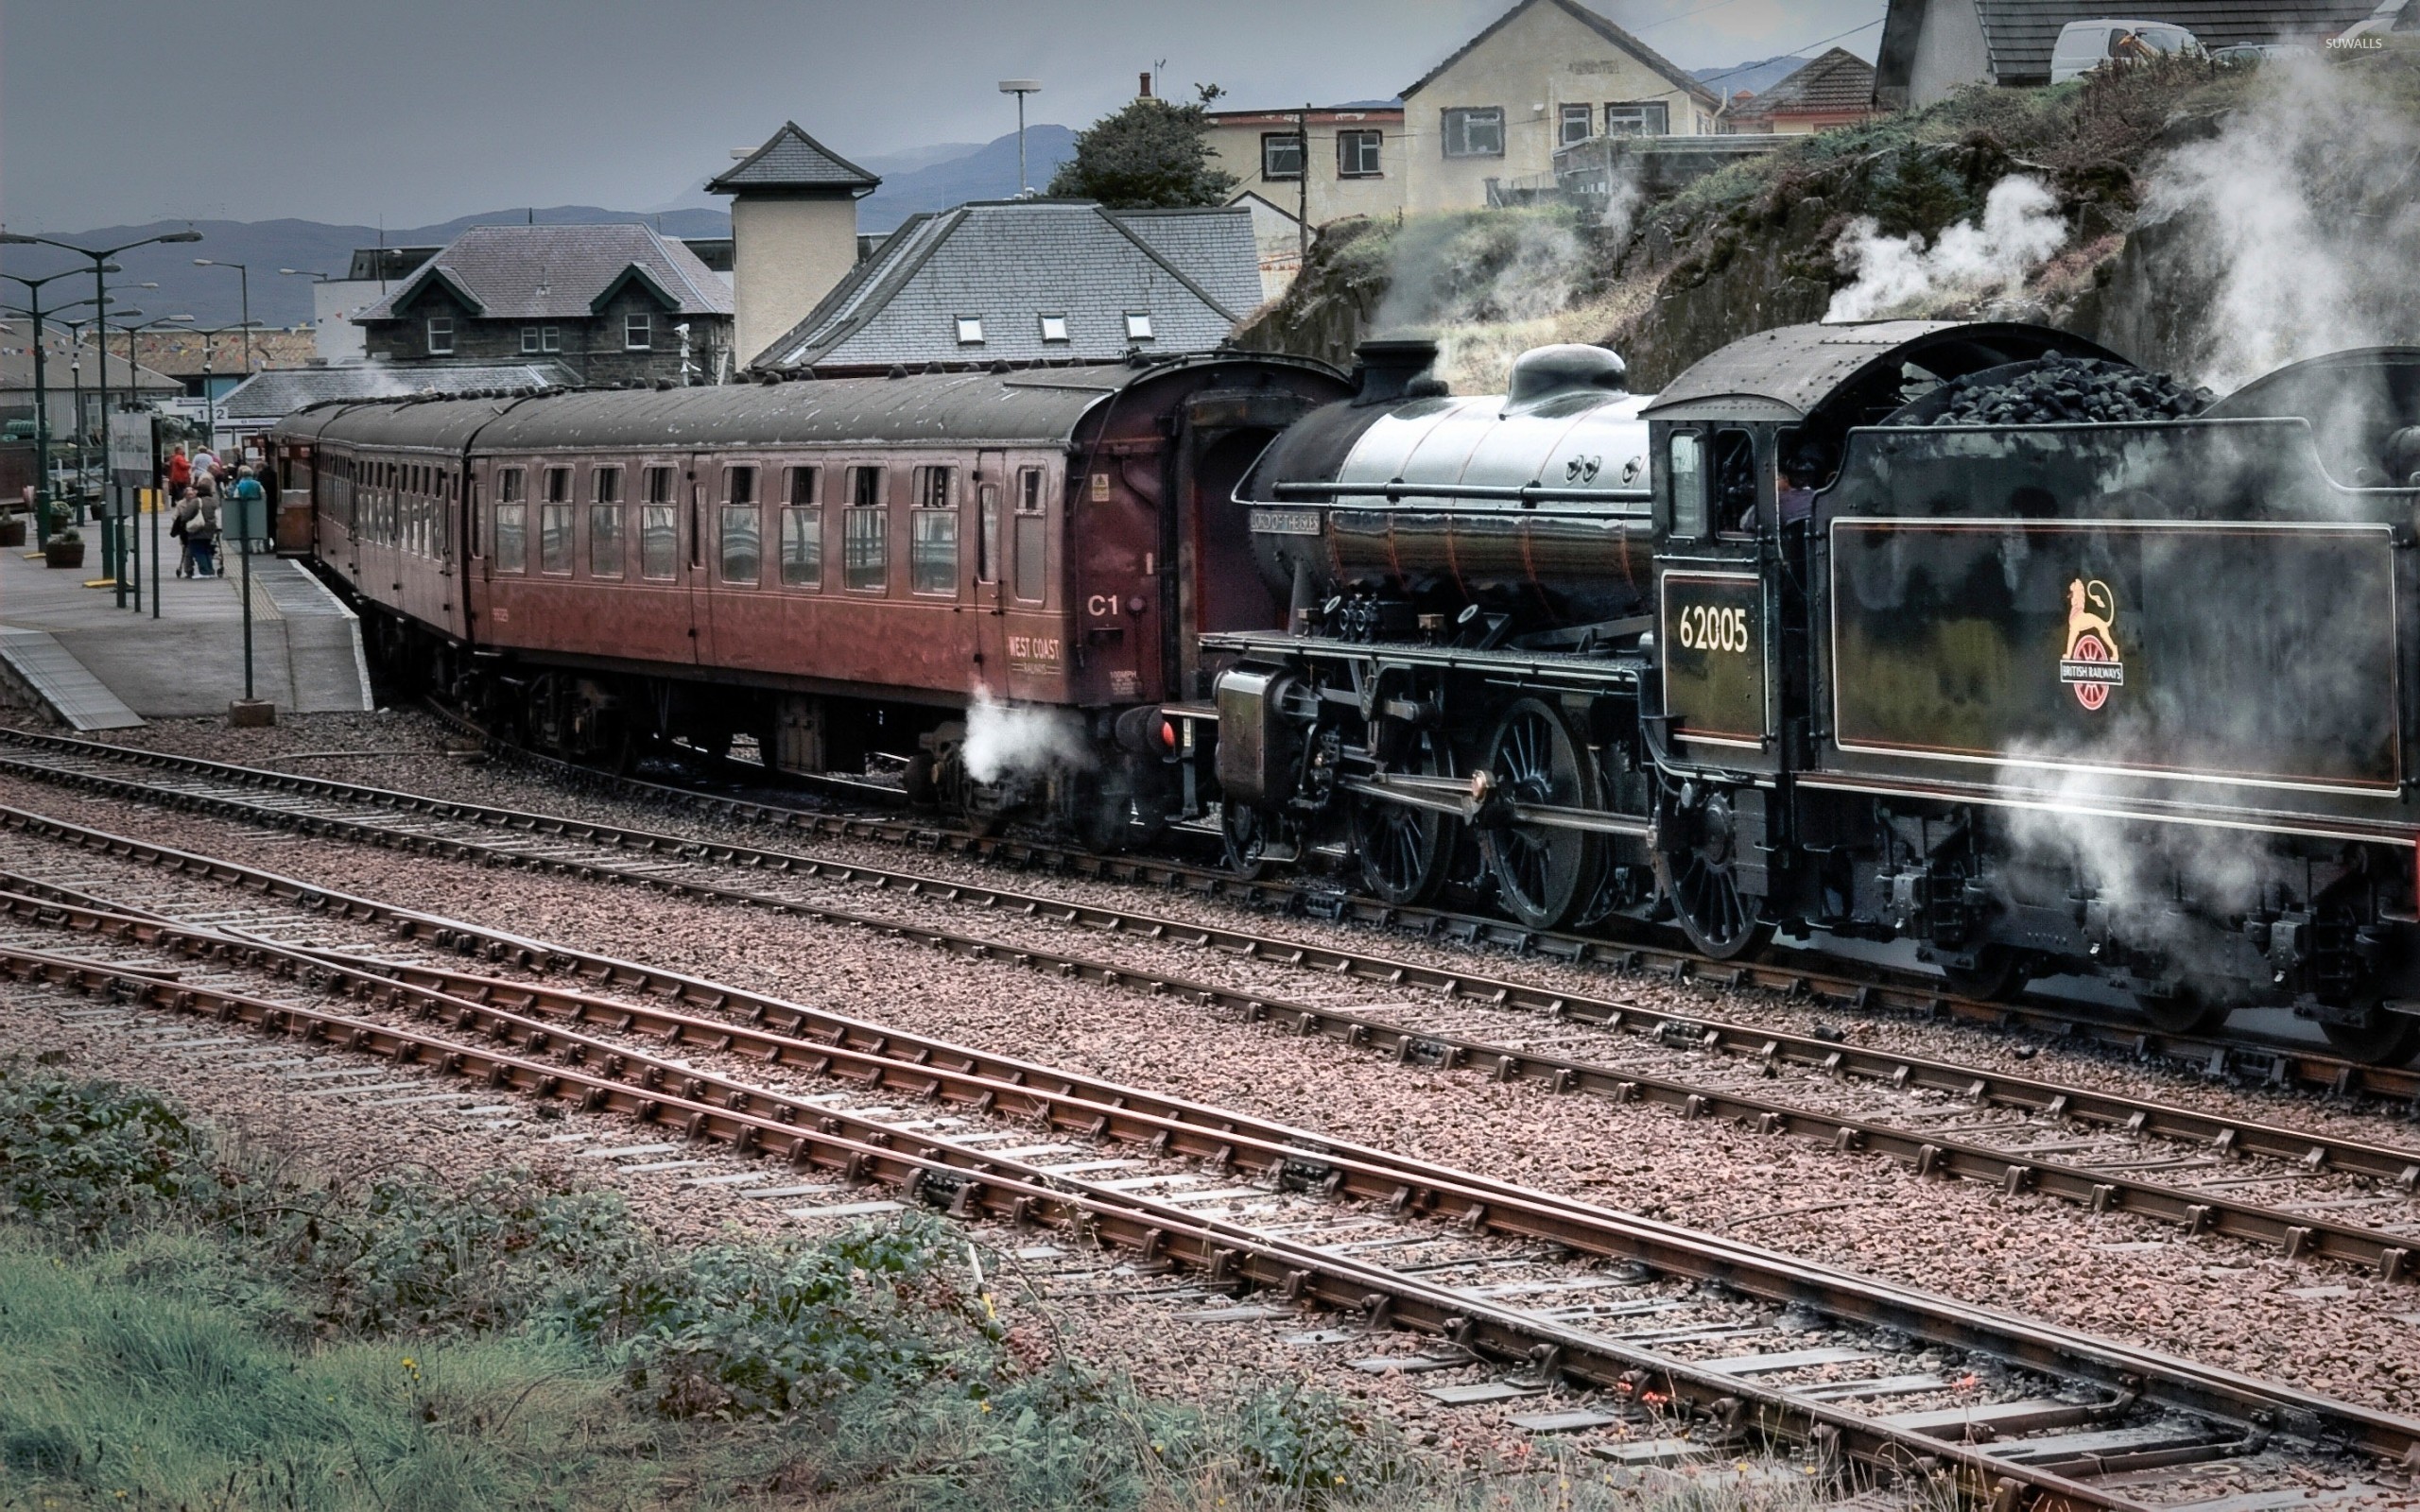 2560x1600 Old steam train locomotive wallpaper